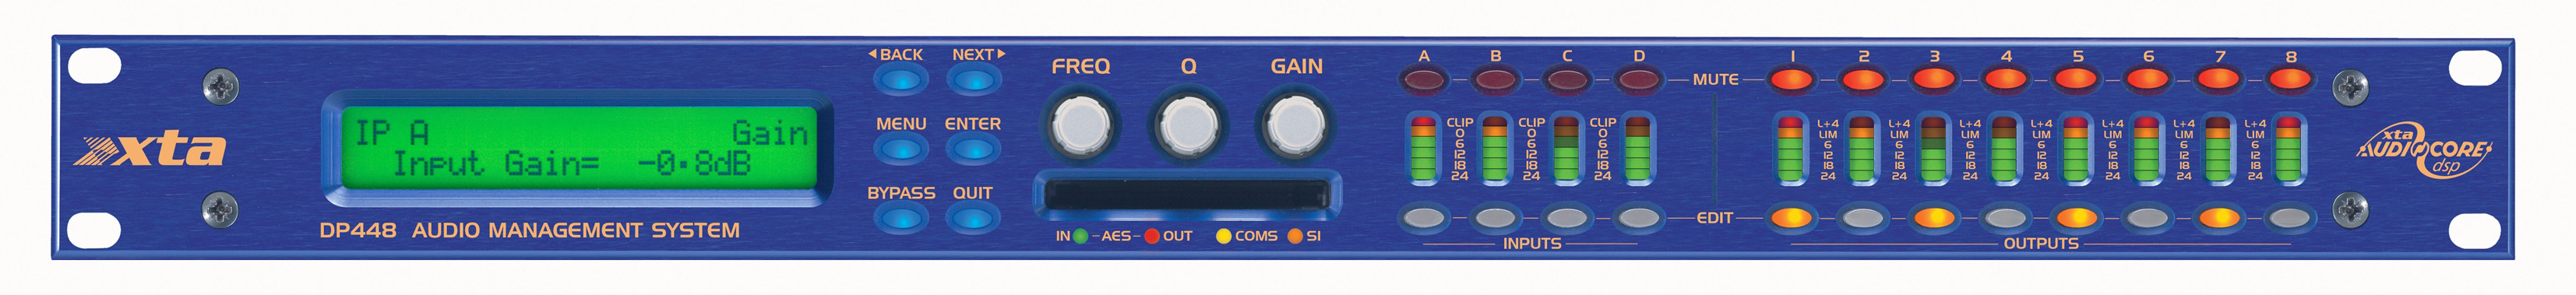 Audio-Management-System DP448 - XTA Electronics